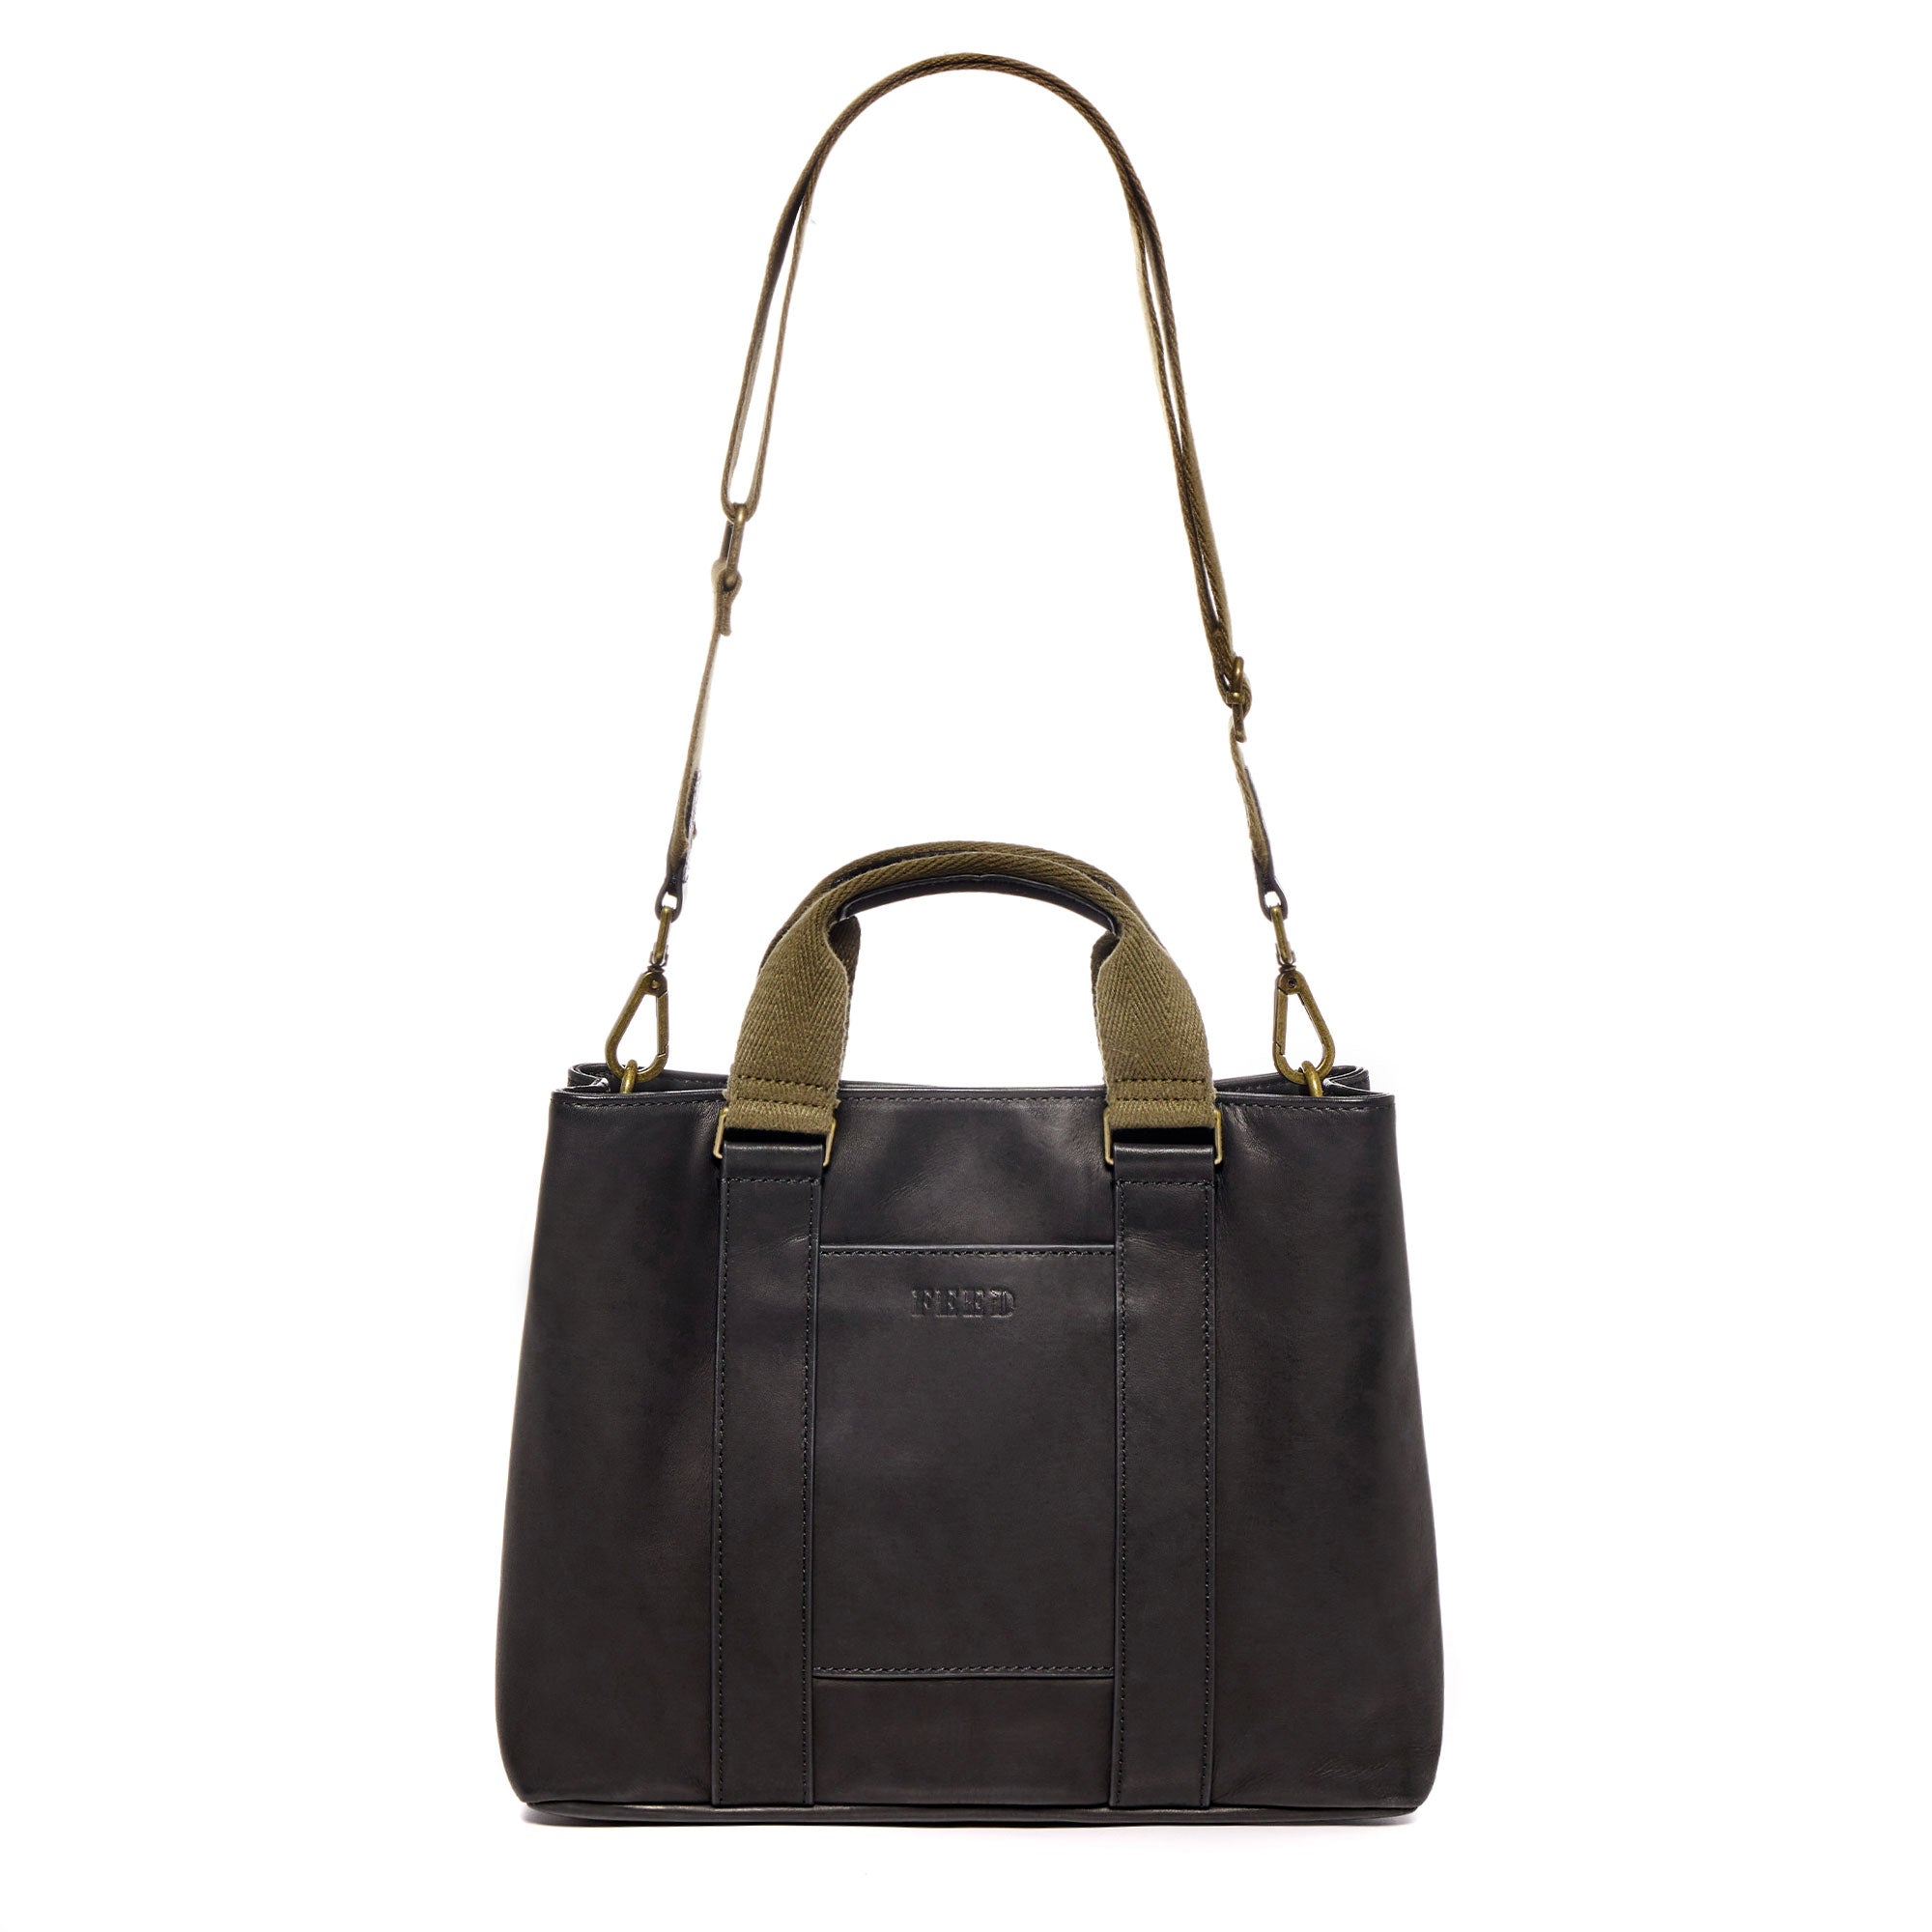 Black Designer Round Leather Crossbody Bag with Exterior Pocket for Women  Gift